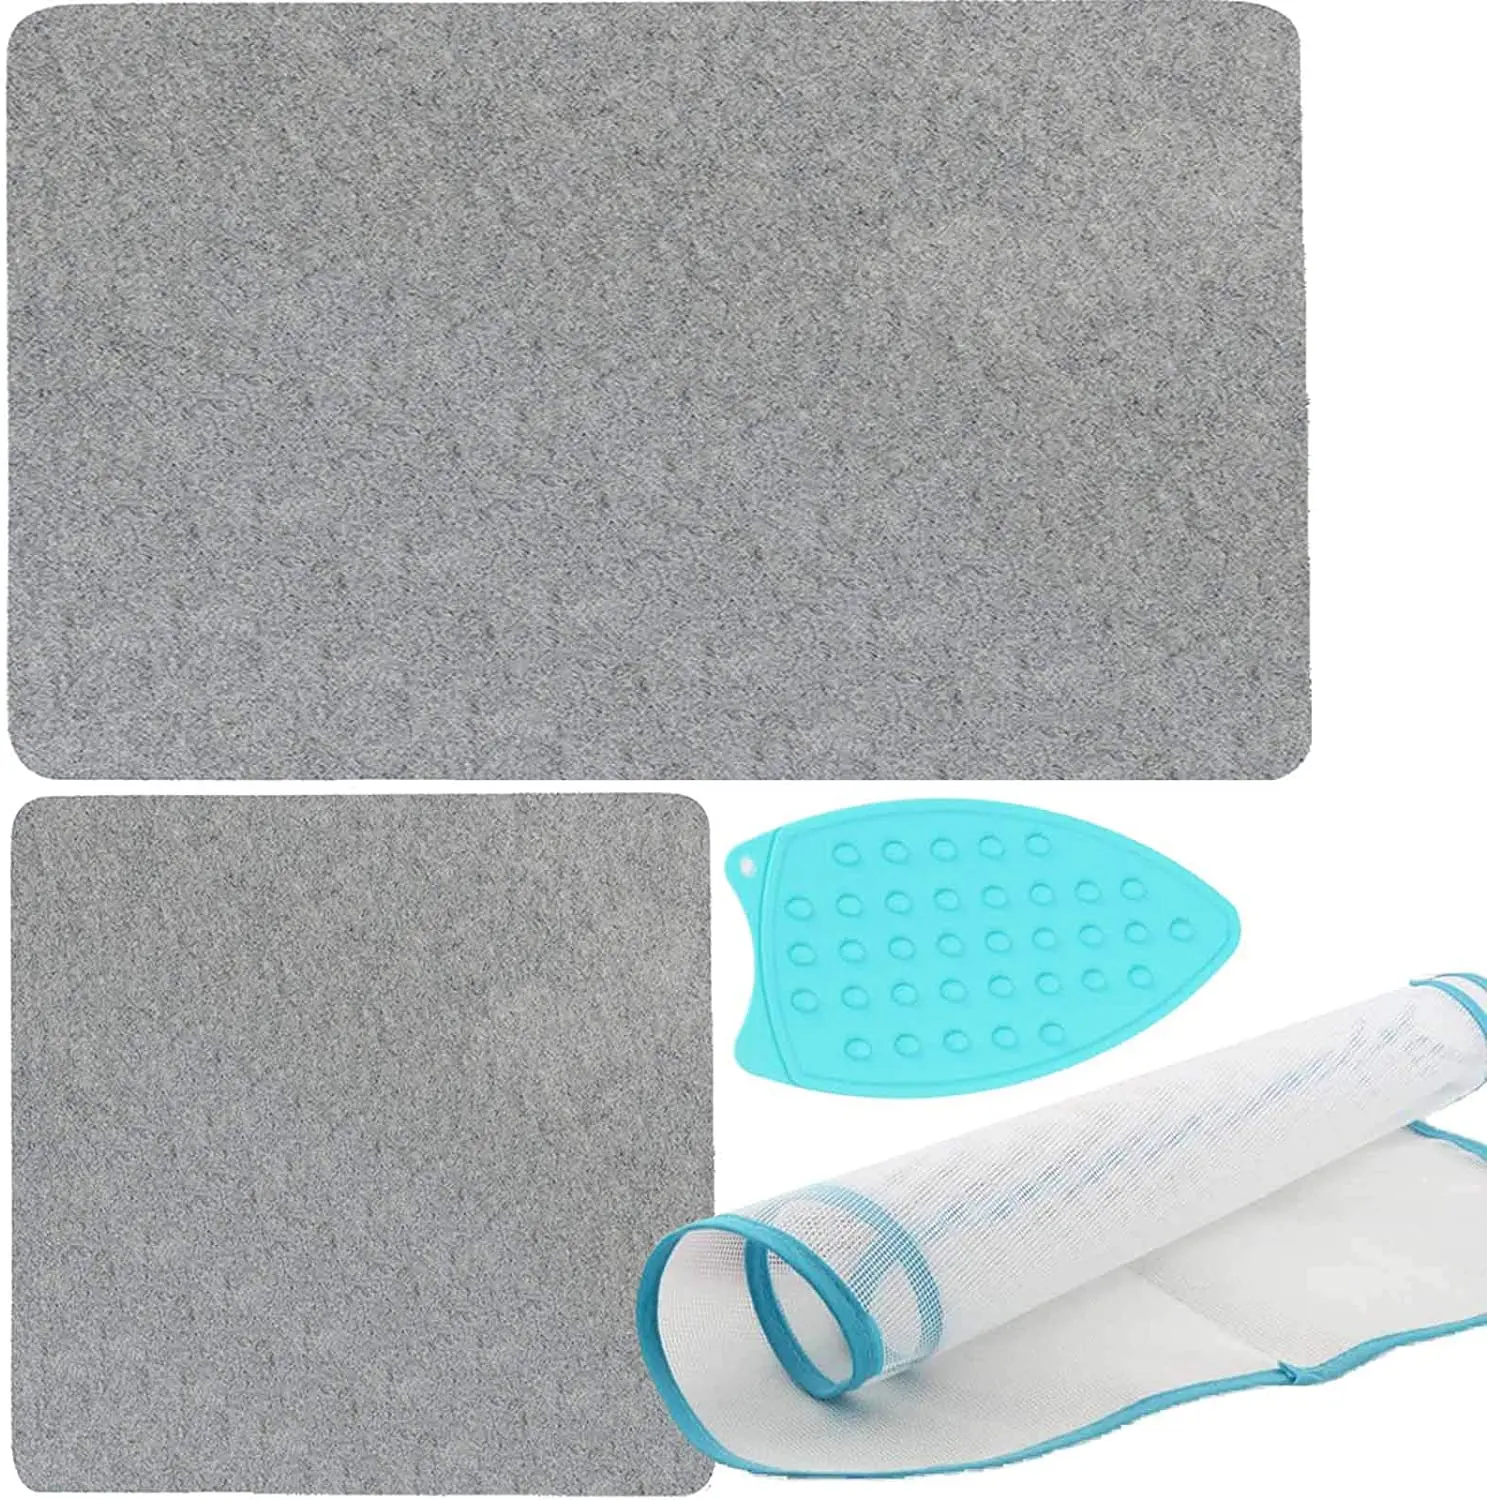 wool ironing mat  2021 trending most popular pure wool ironing board Amazon